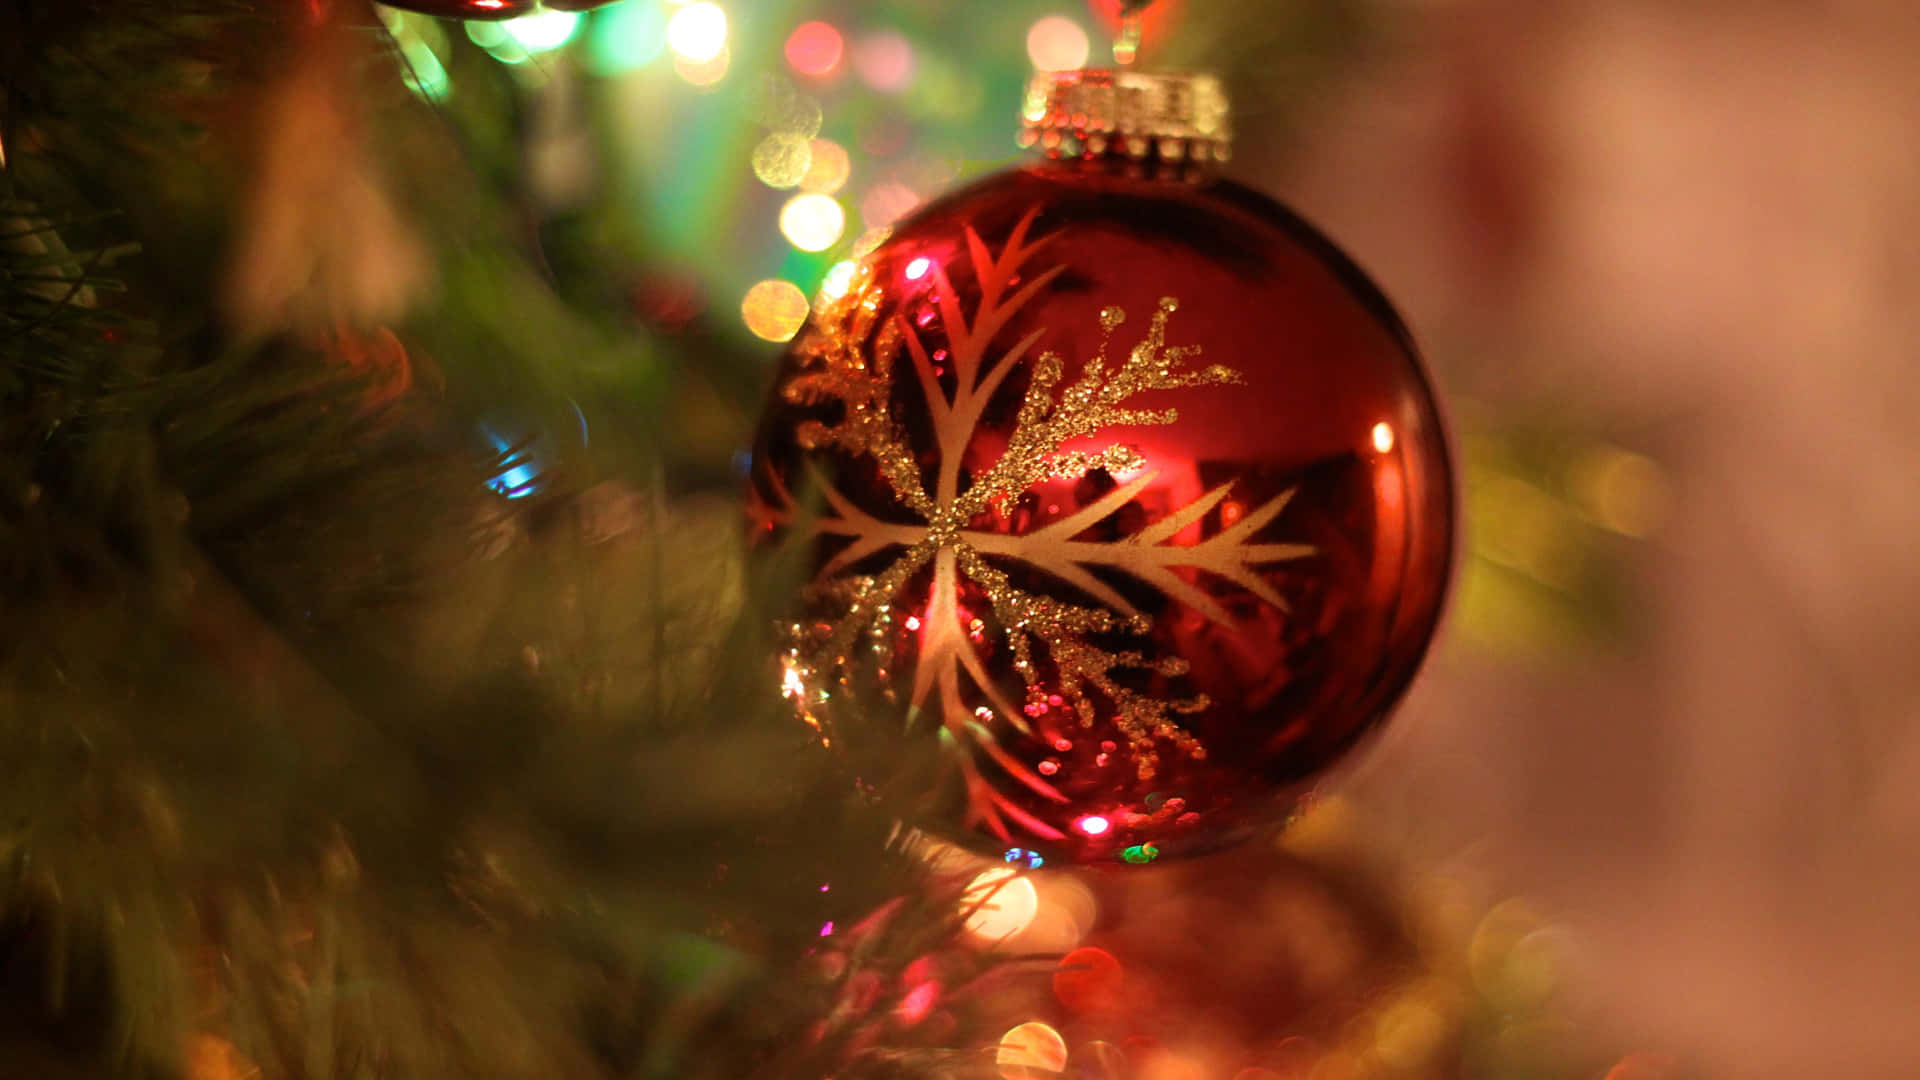 Download Preppy Christmas Ornament Close Up Wallpaper